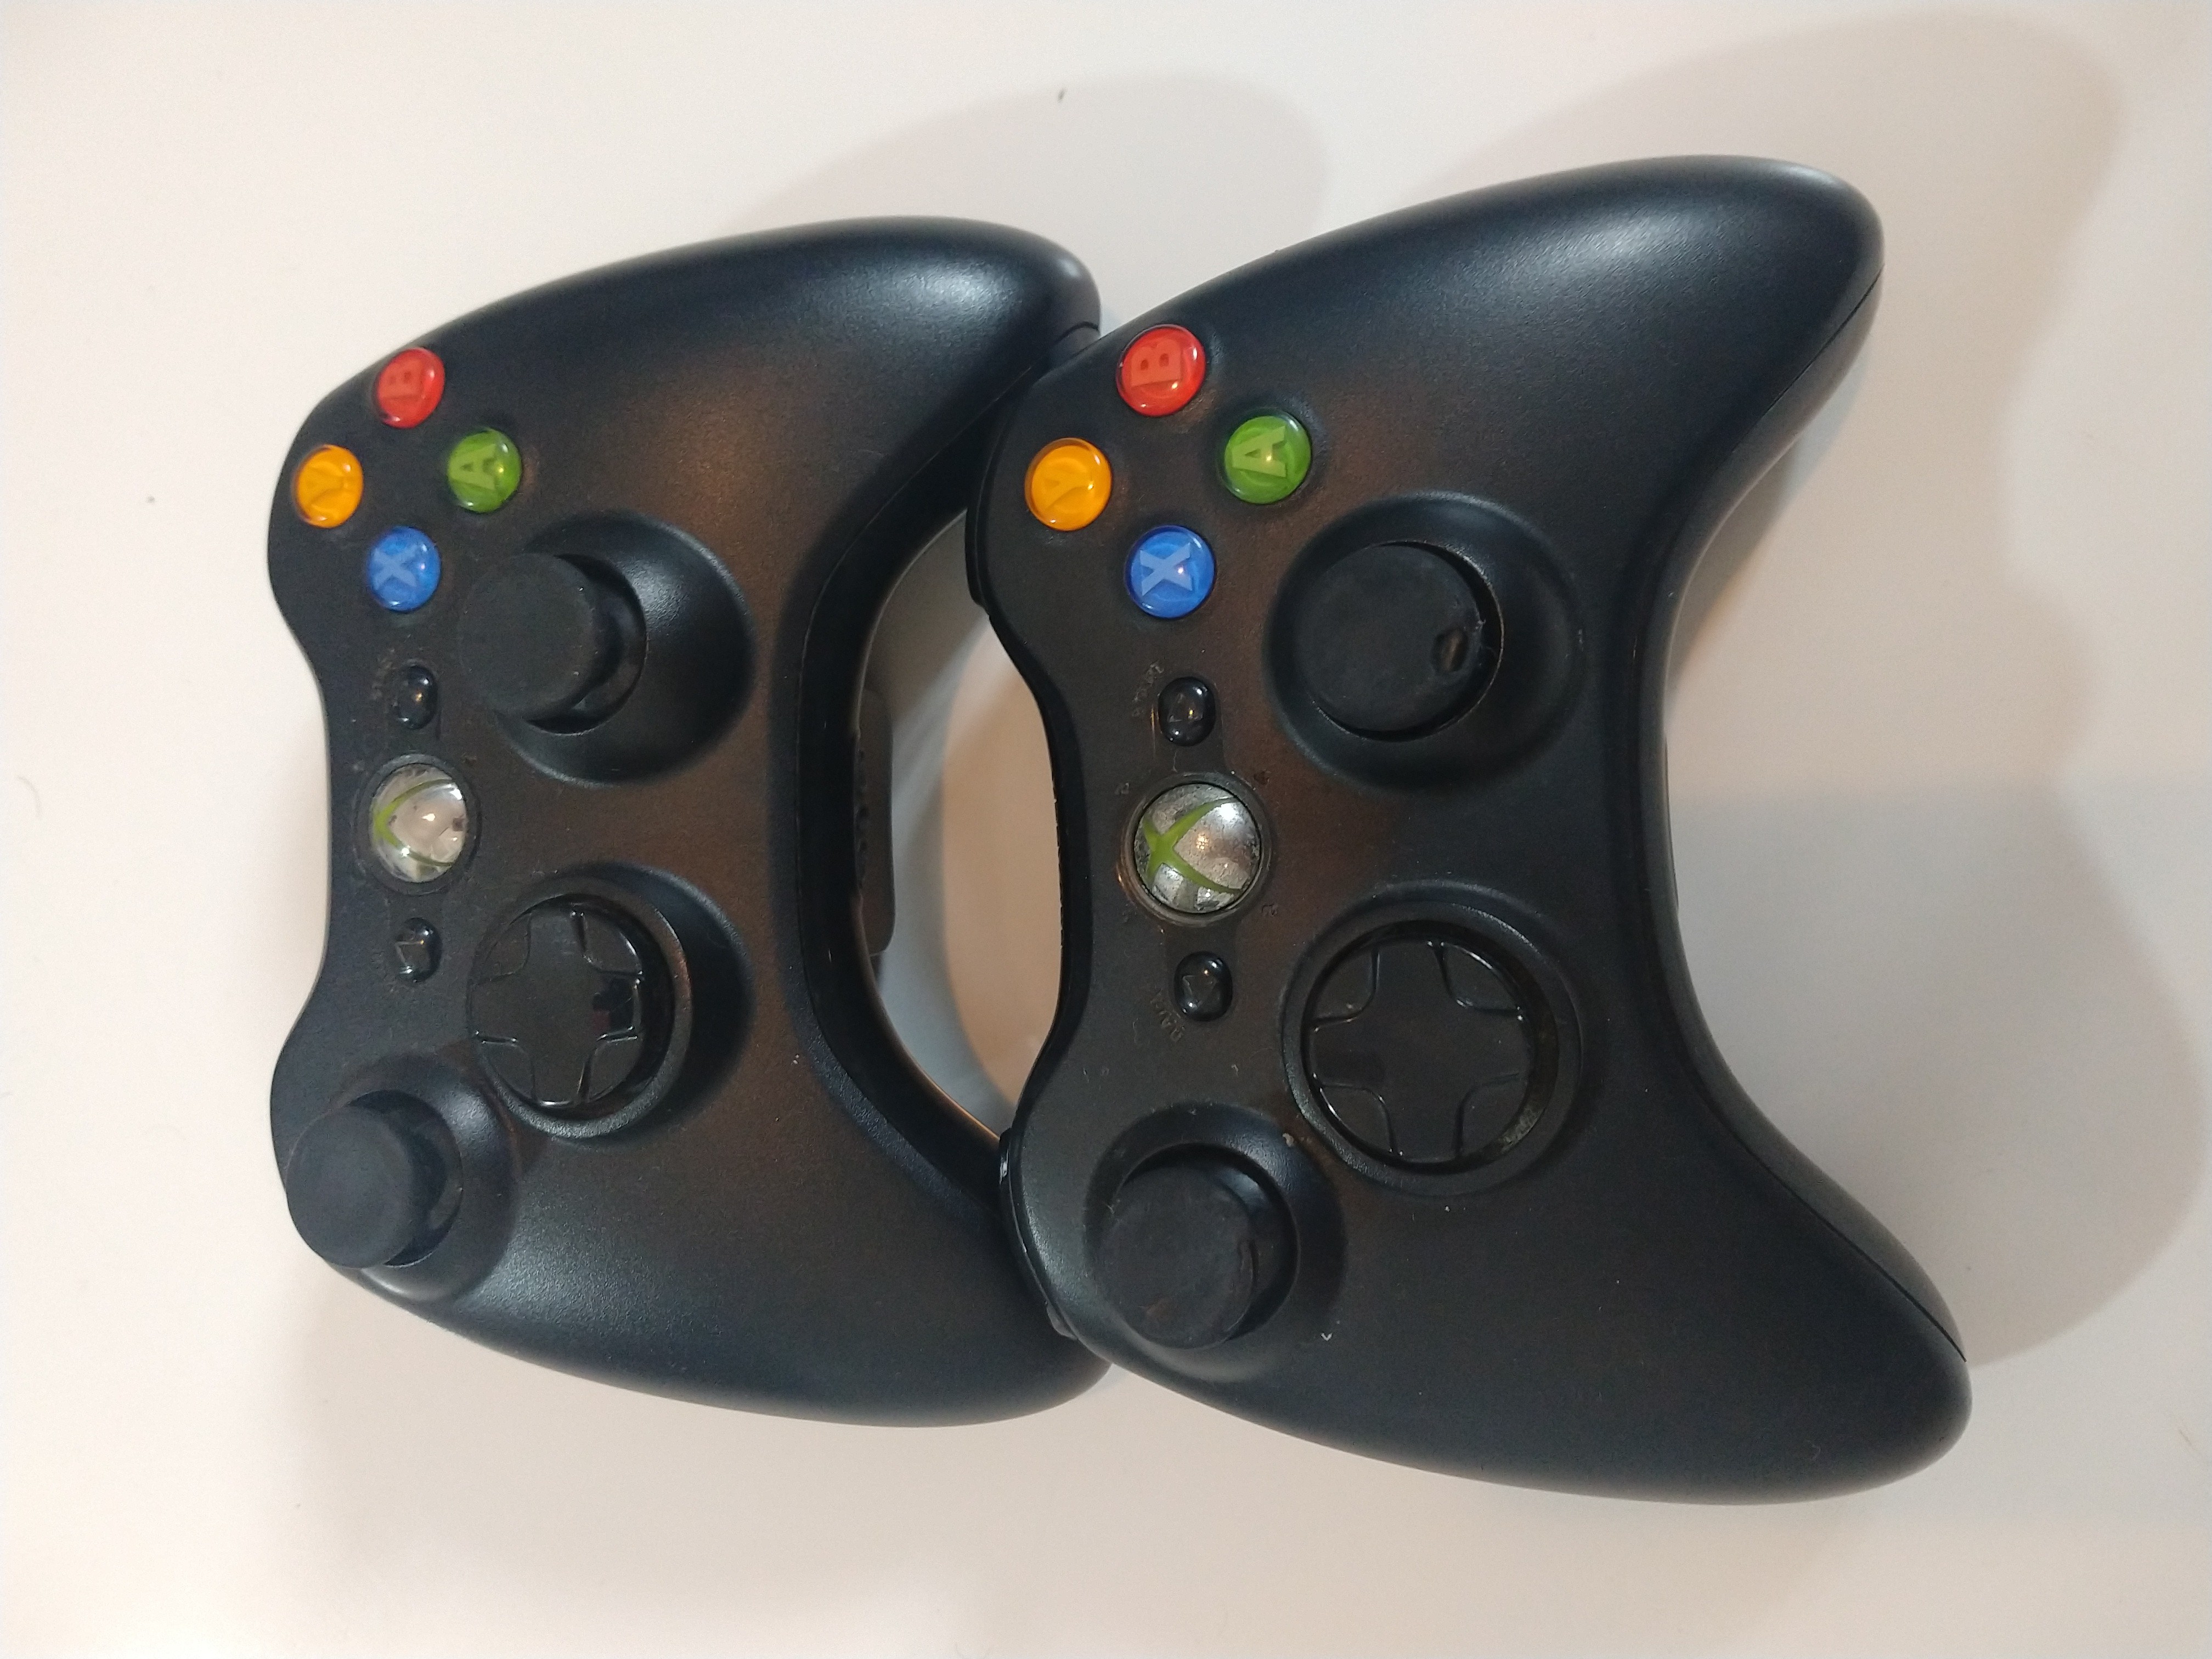 Xbox 360 500 Giga dois controles s/ fios + Kinect